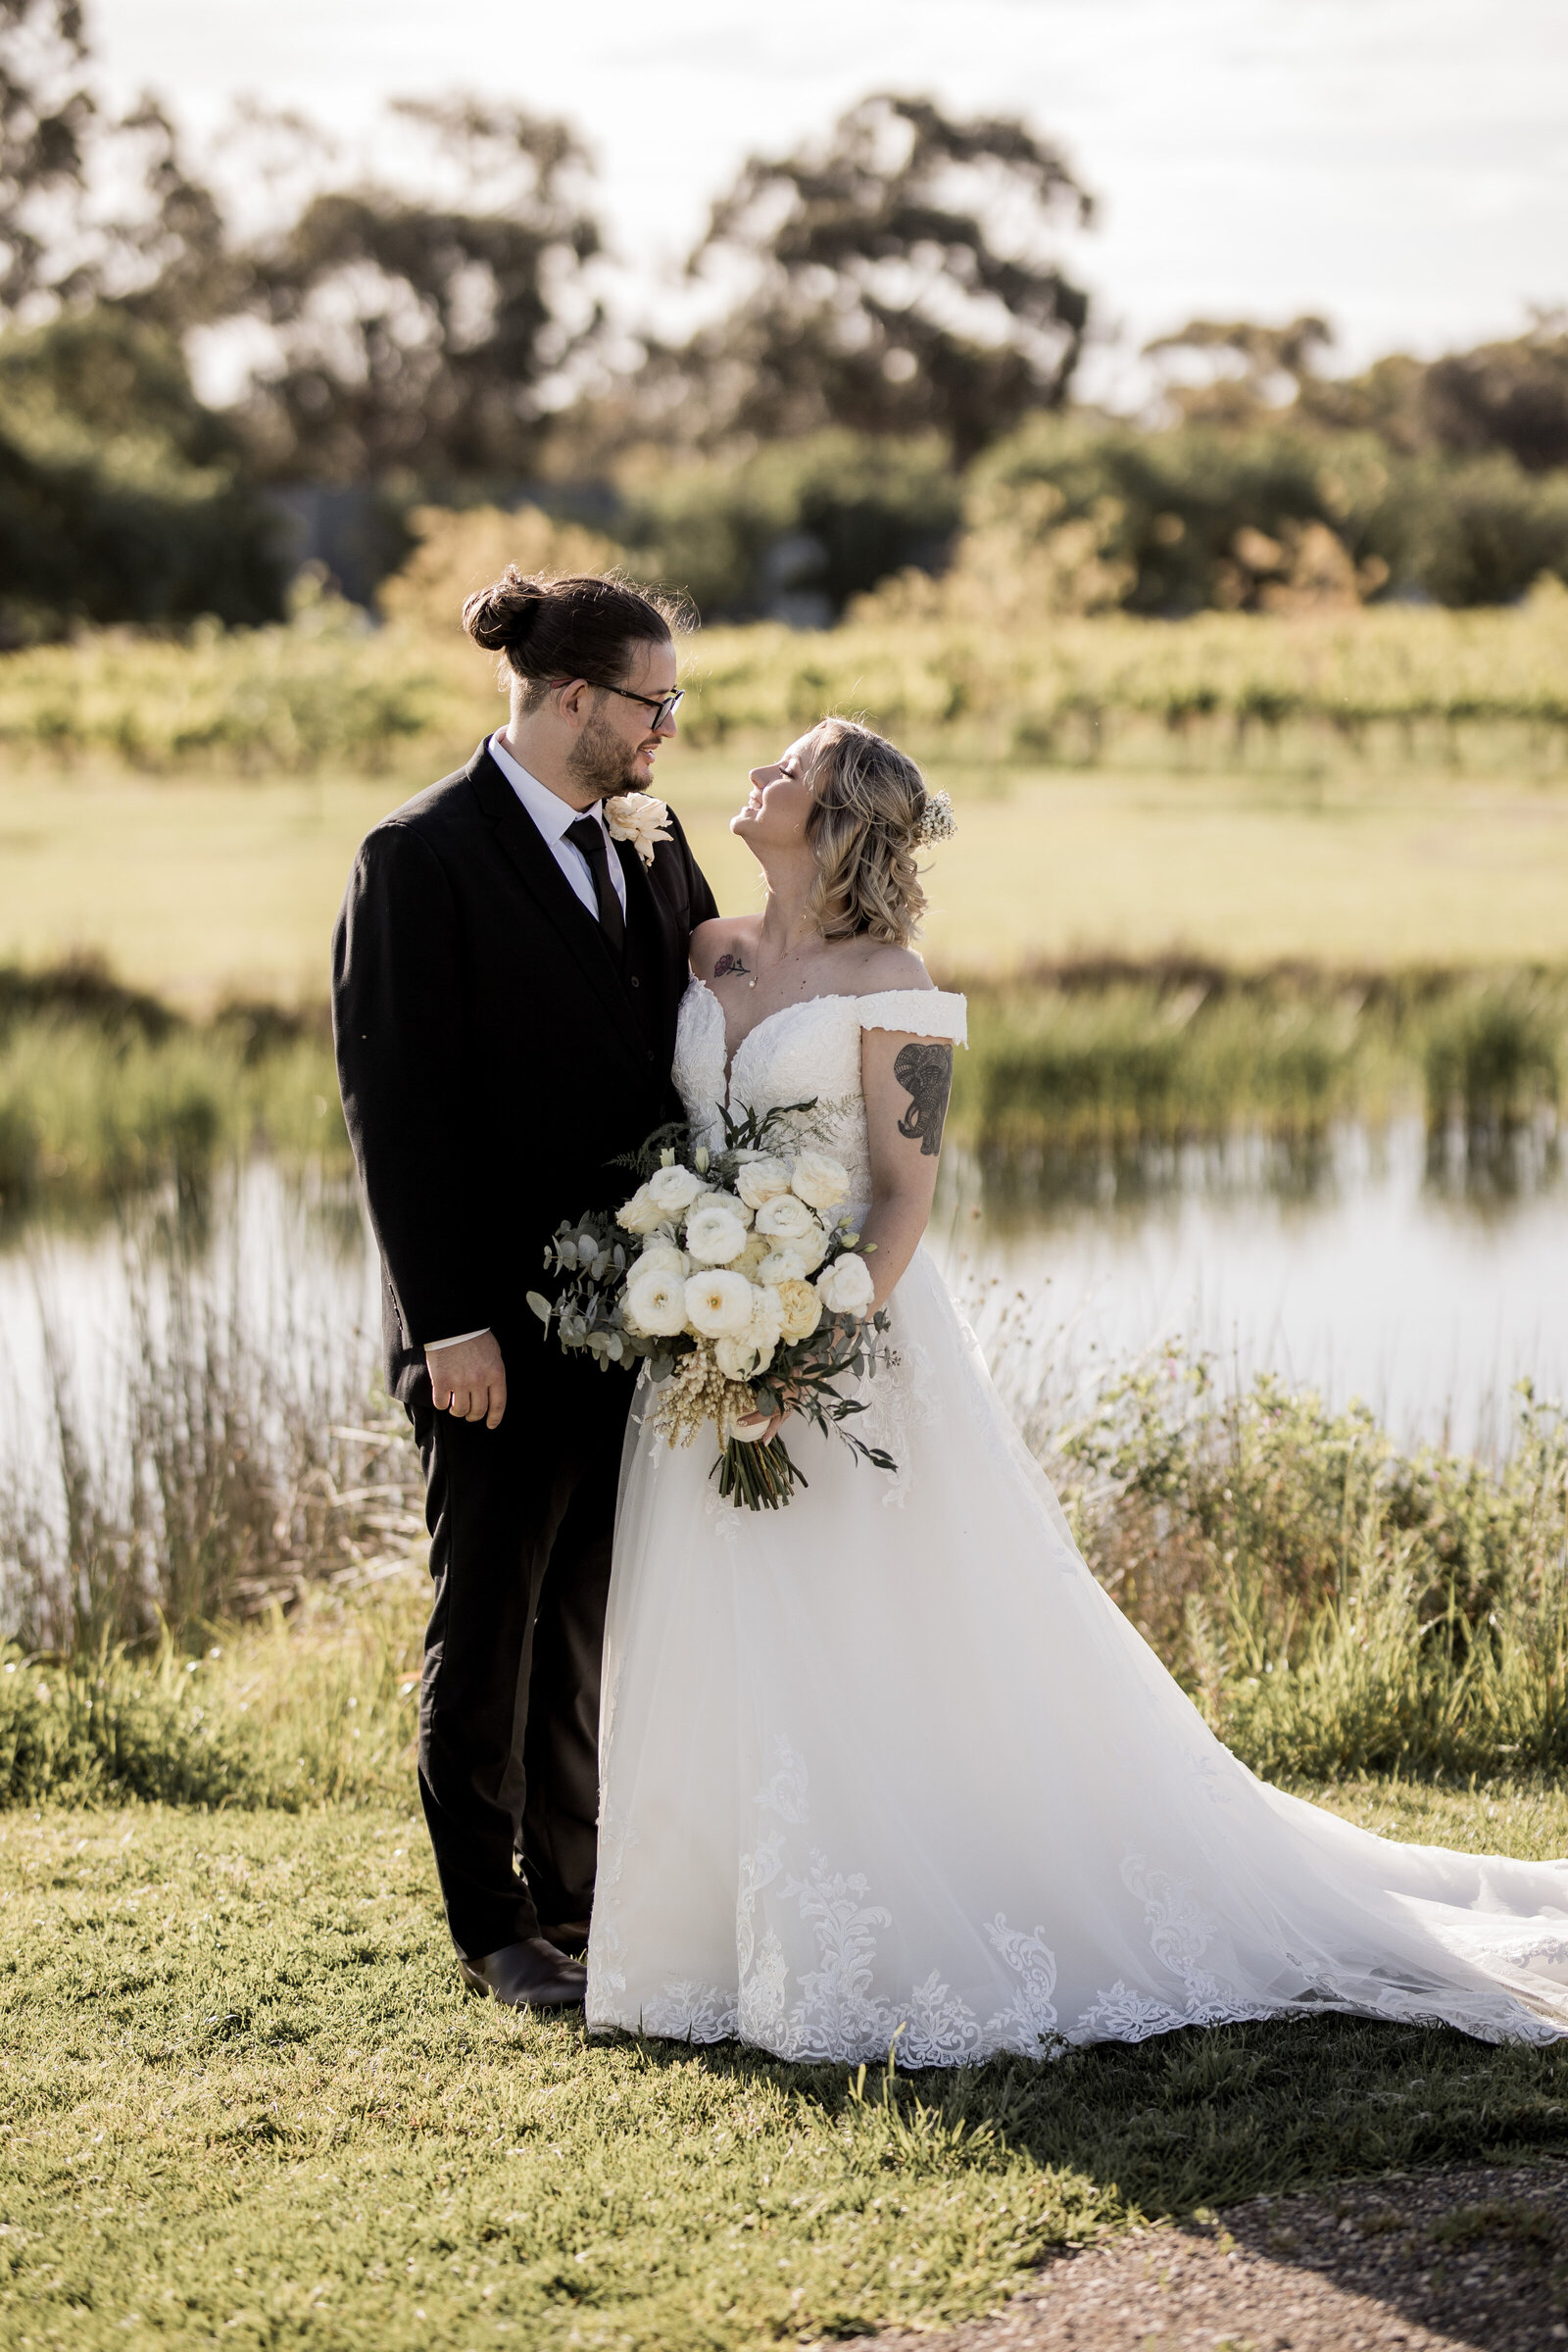 Maxine-Chris-Rexvil-Photography-Adelaide-Wedding-Photographer-469